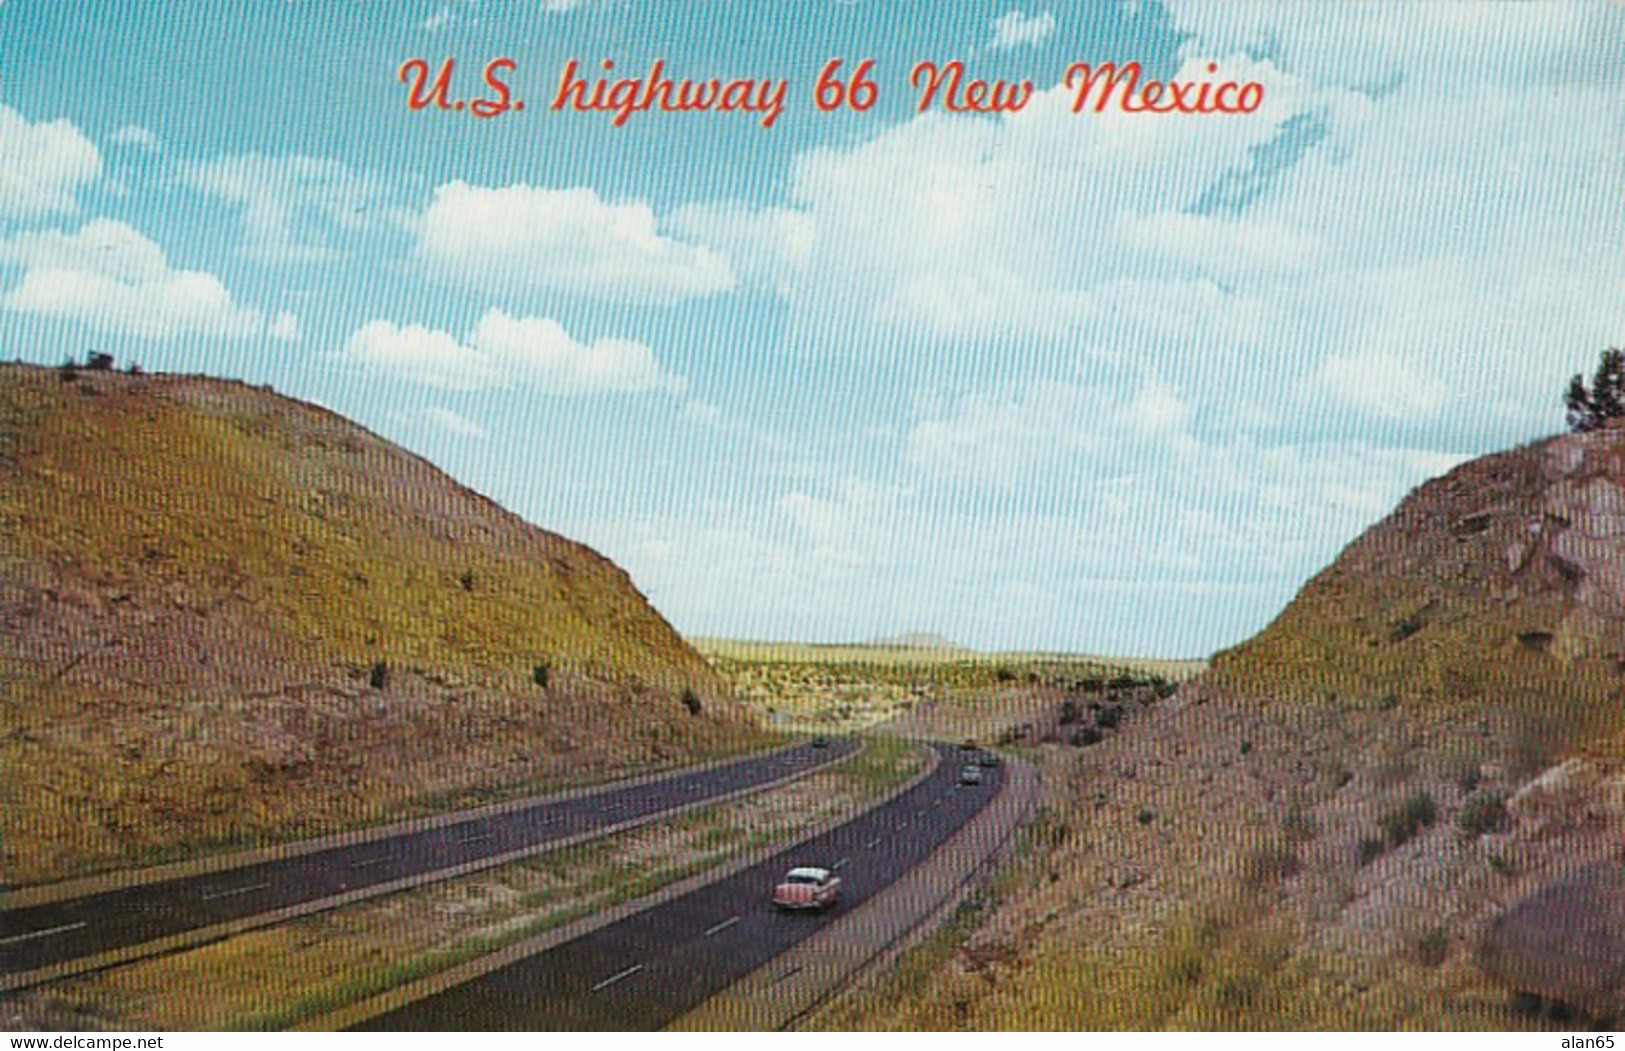 New Mexico Route 66 , Between Tucumcari And Santa Rosa, C1950s/60s Vintage Postcard - Route '66'